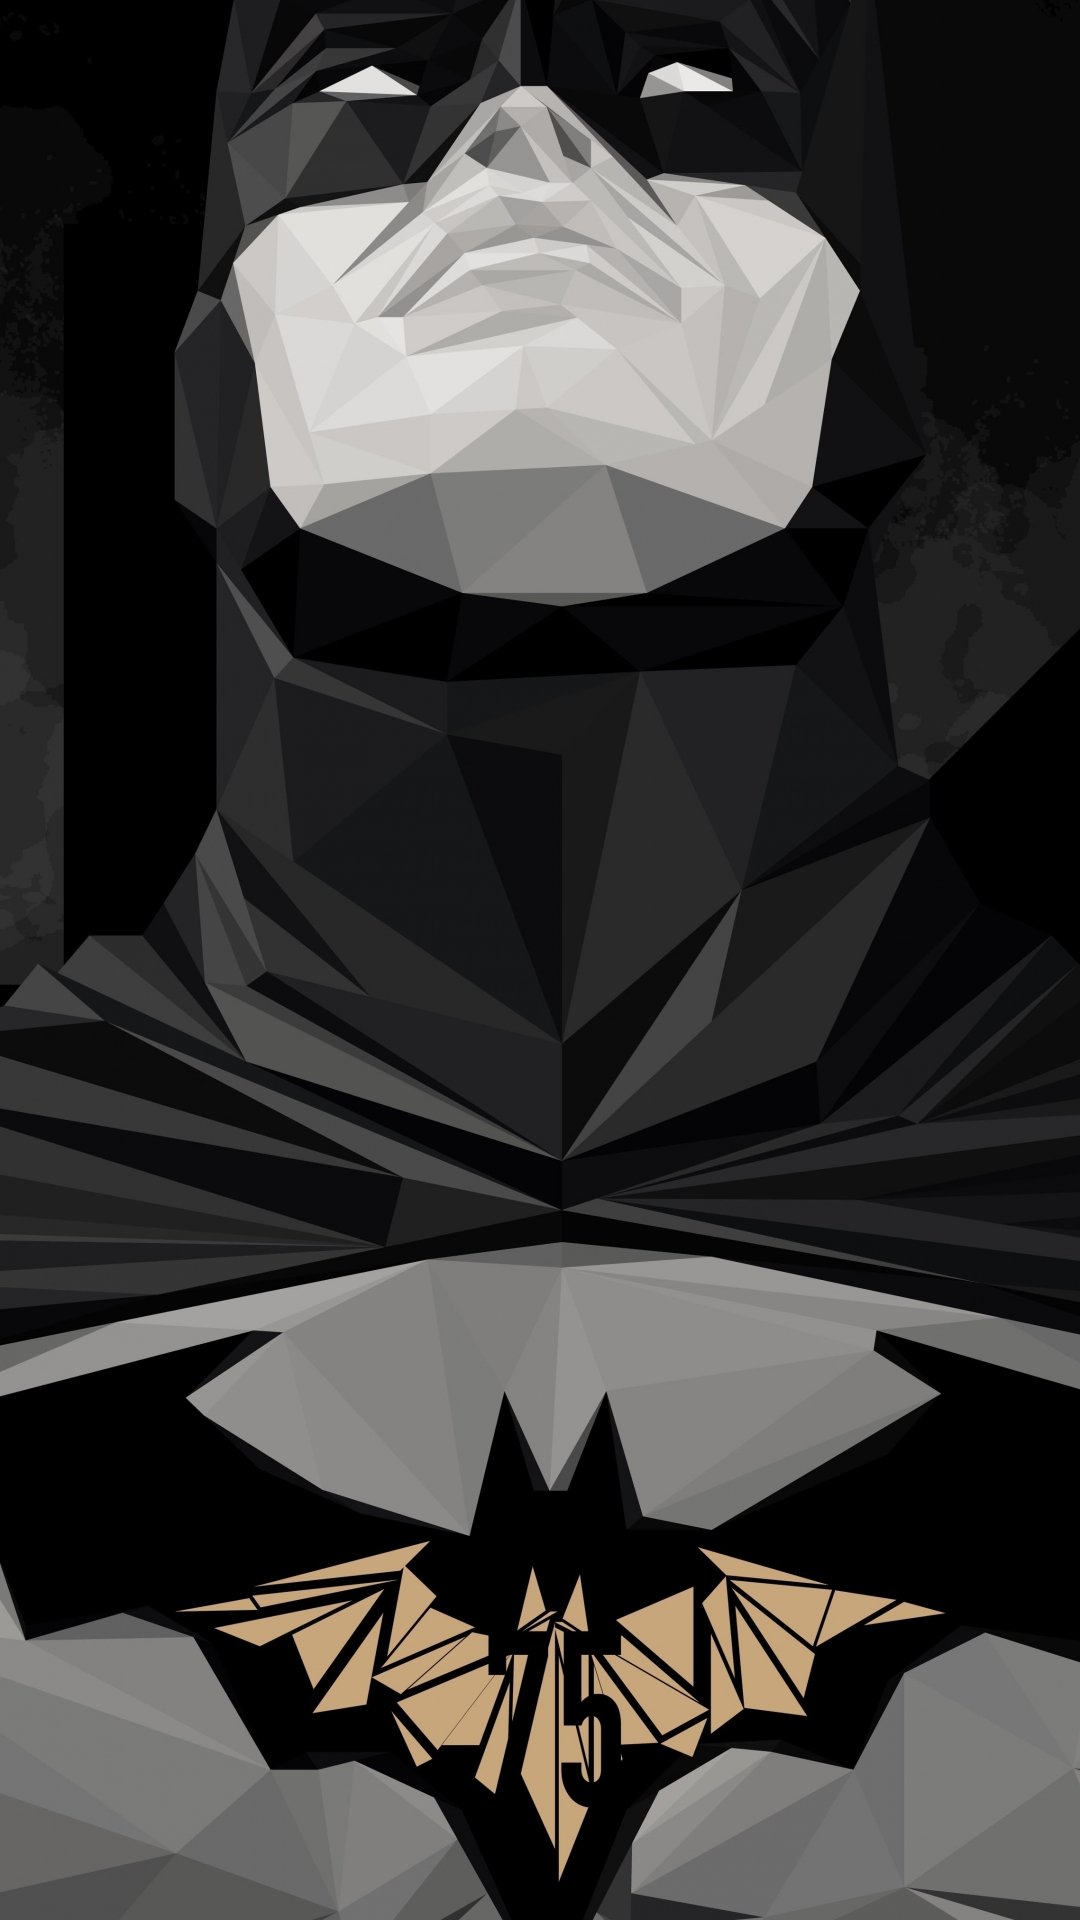 Batman Phone Wallpaper - Mobile Abyss